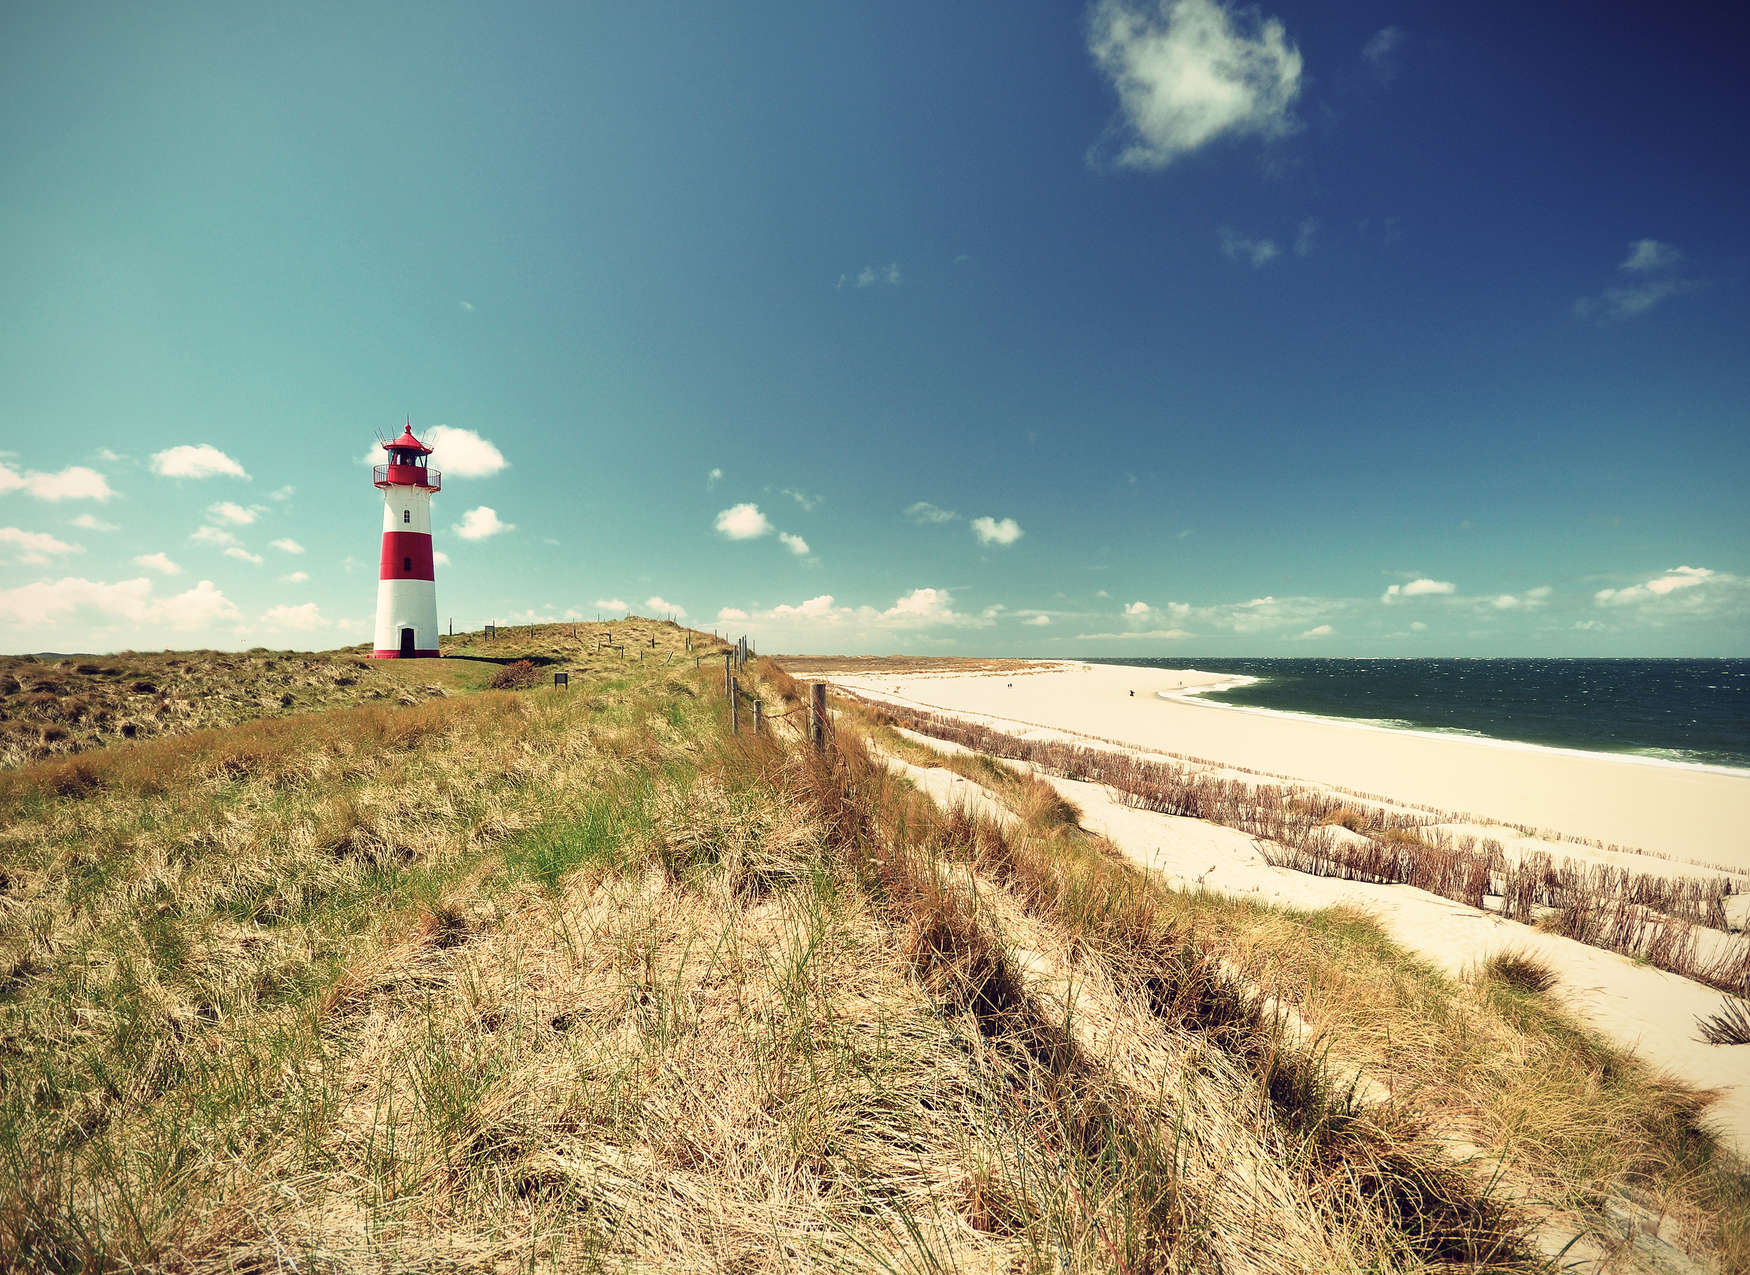             Strandlandschaft mit Leuchtturm – Grün, Blau, Braun
        